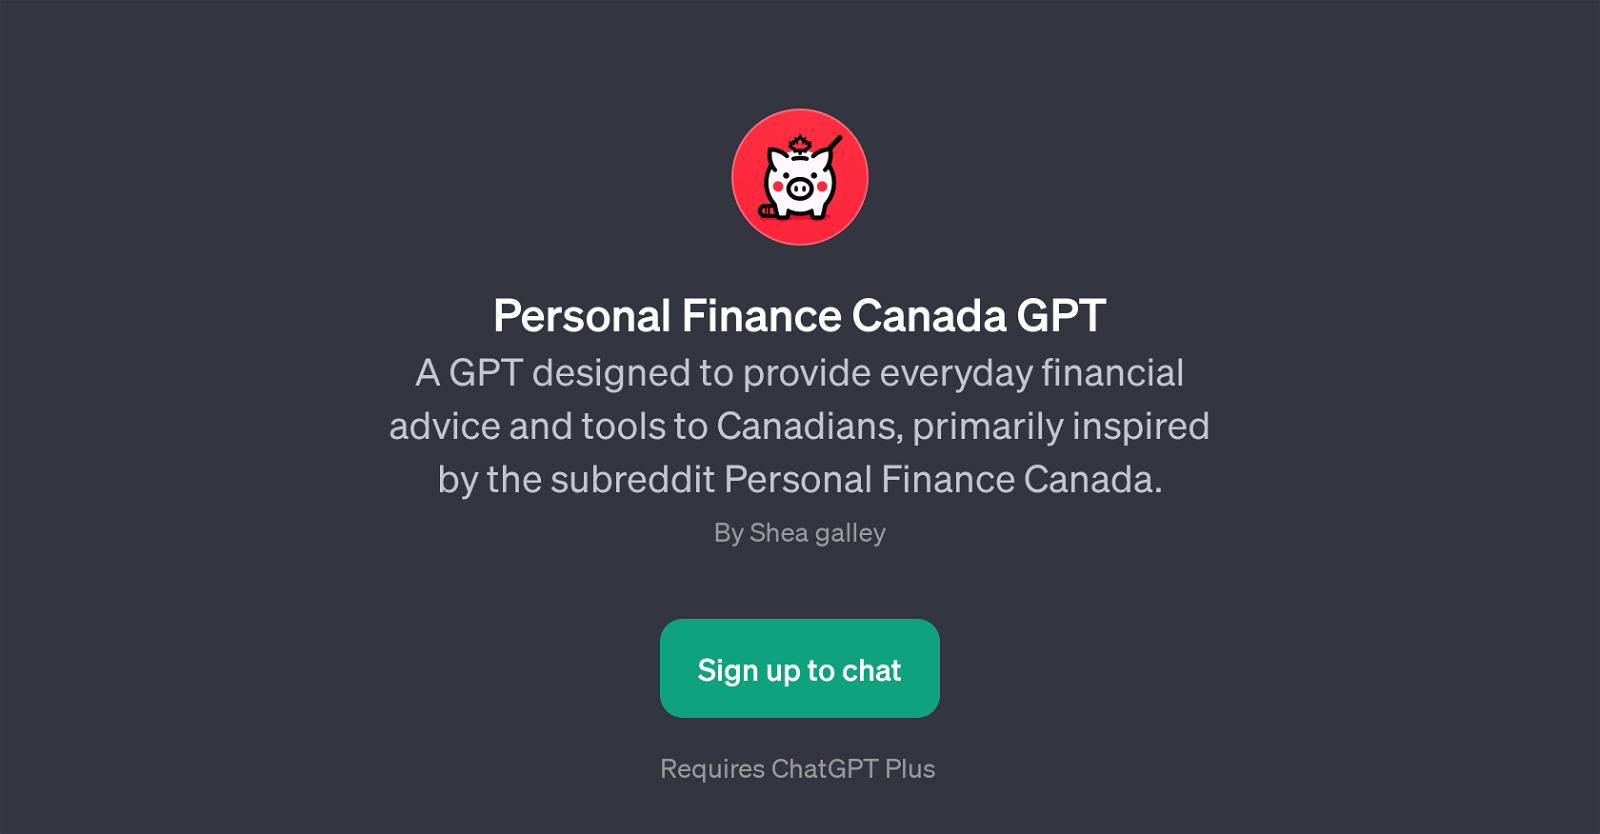 Personal Finance Canada GPT website